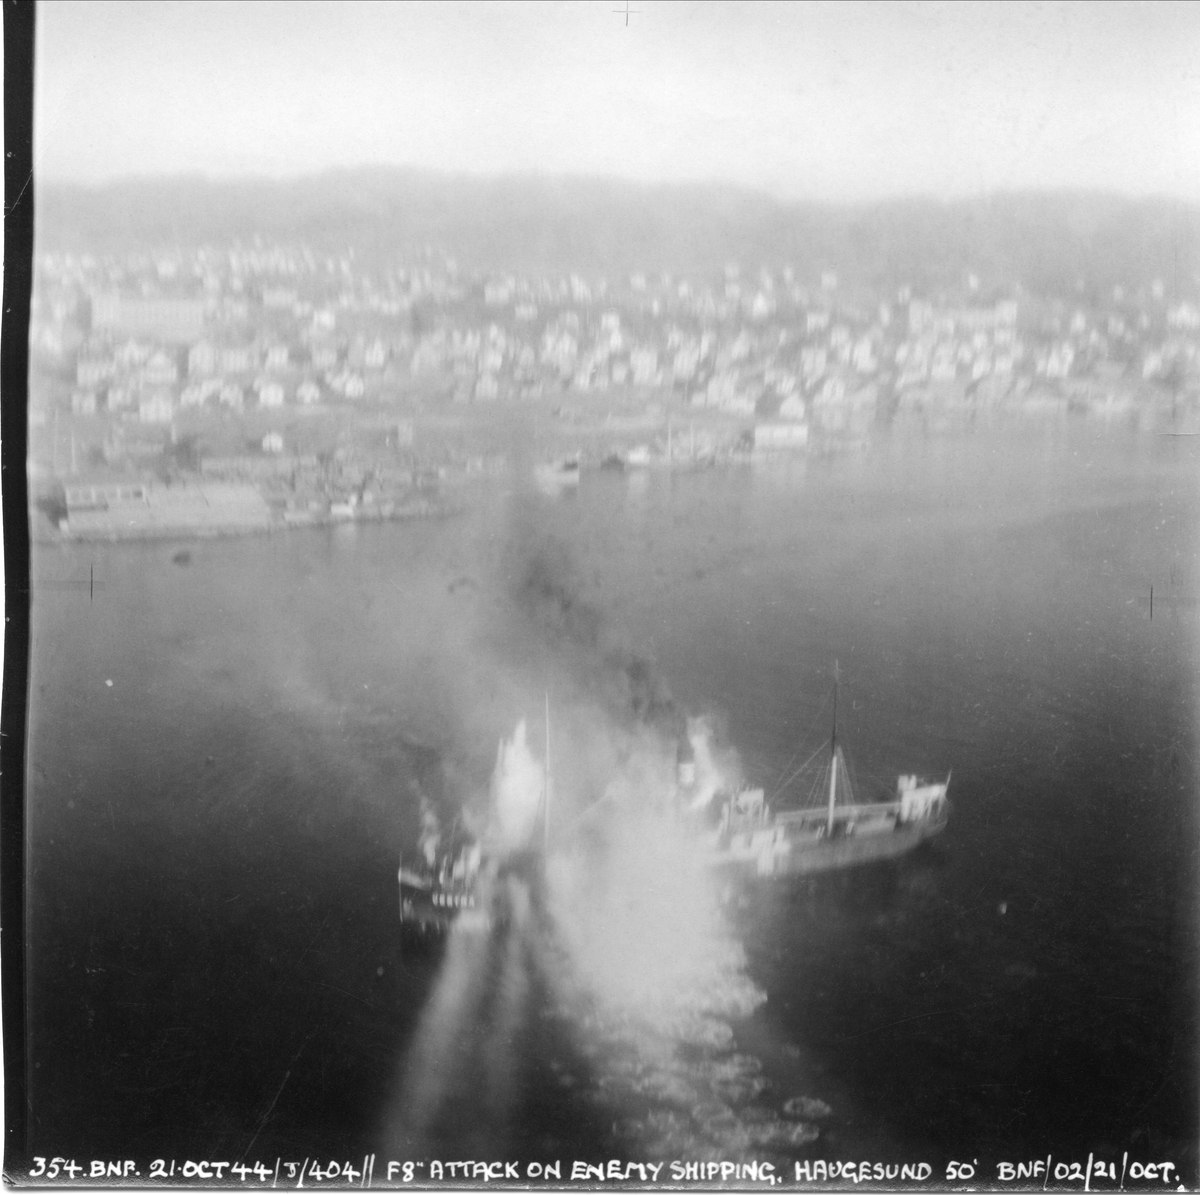 Fly fra 404 skvadronen angriper fiendtlige skip i Haugesund, 21. oktober 1944.